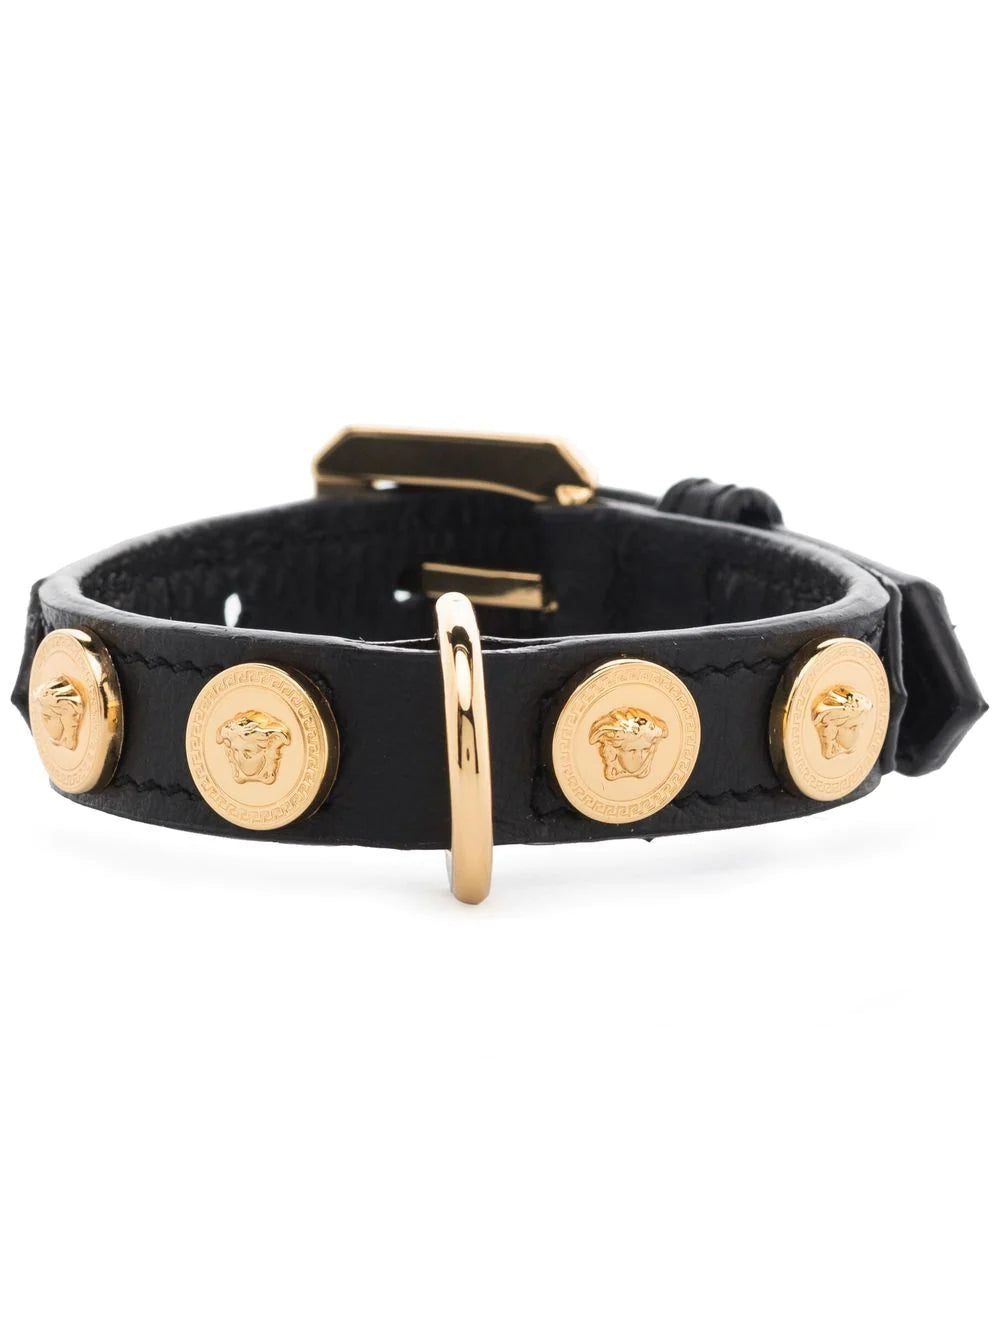 Versace dog collar  Dog accessories collar, Dog training collar